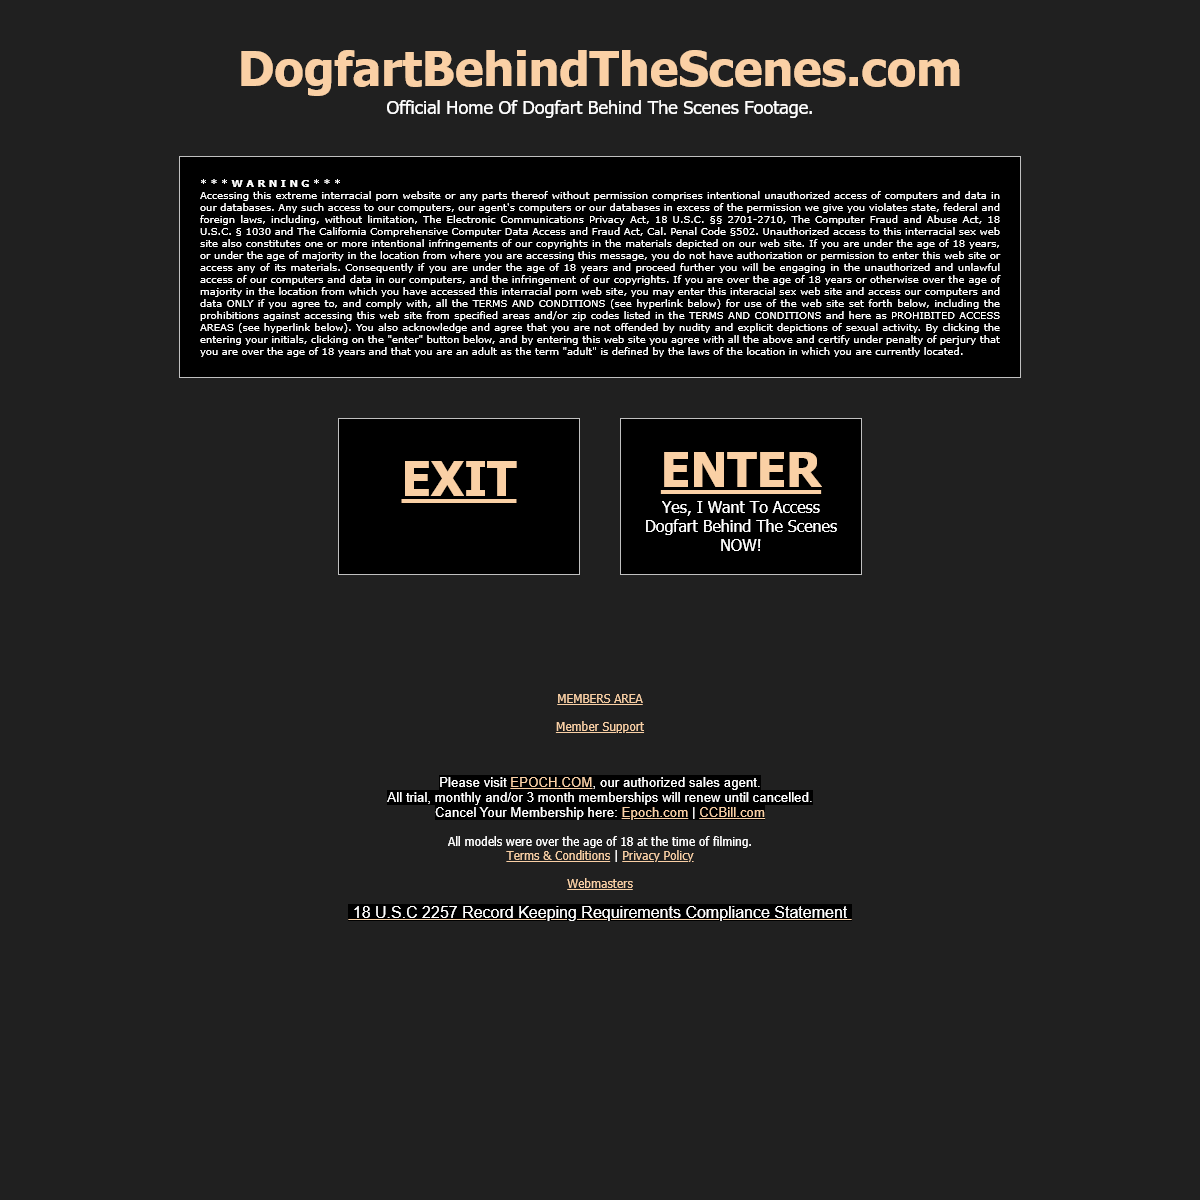 A complete backup of www.dogfartbehindthescenes.com